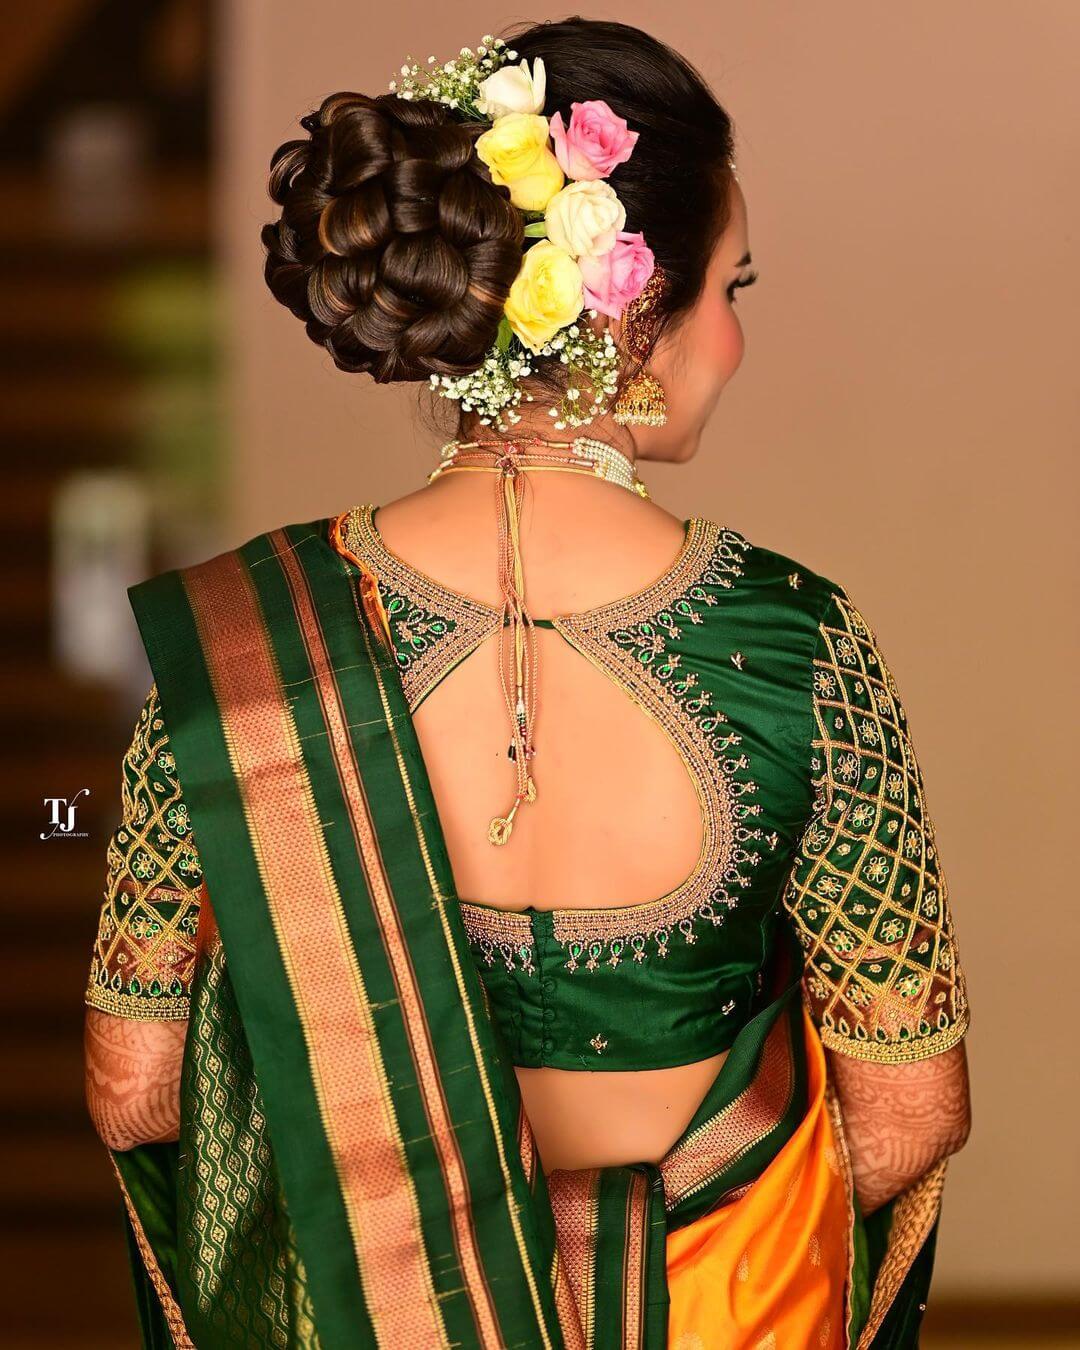 Beautiful Nauvari Sarees We Spotted On These Real Maharashtrian Brides! |  WeddingBazaar